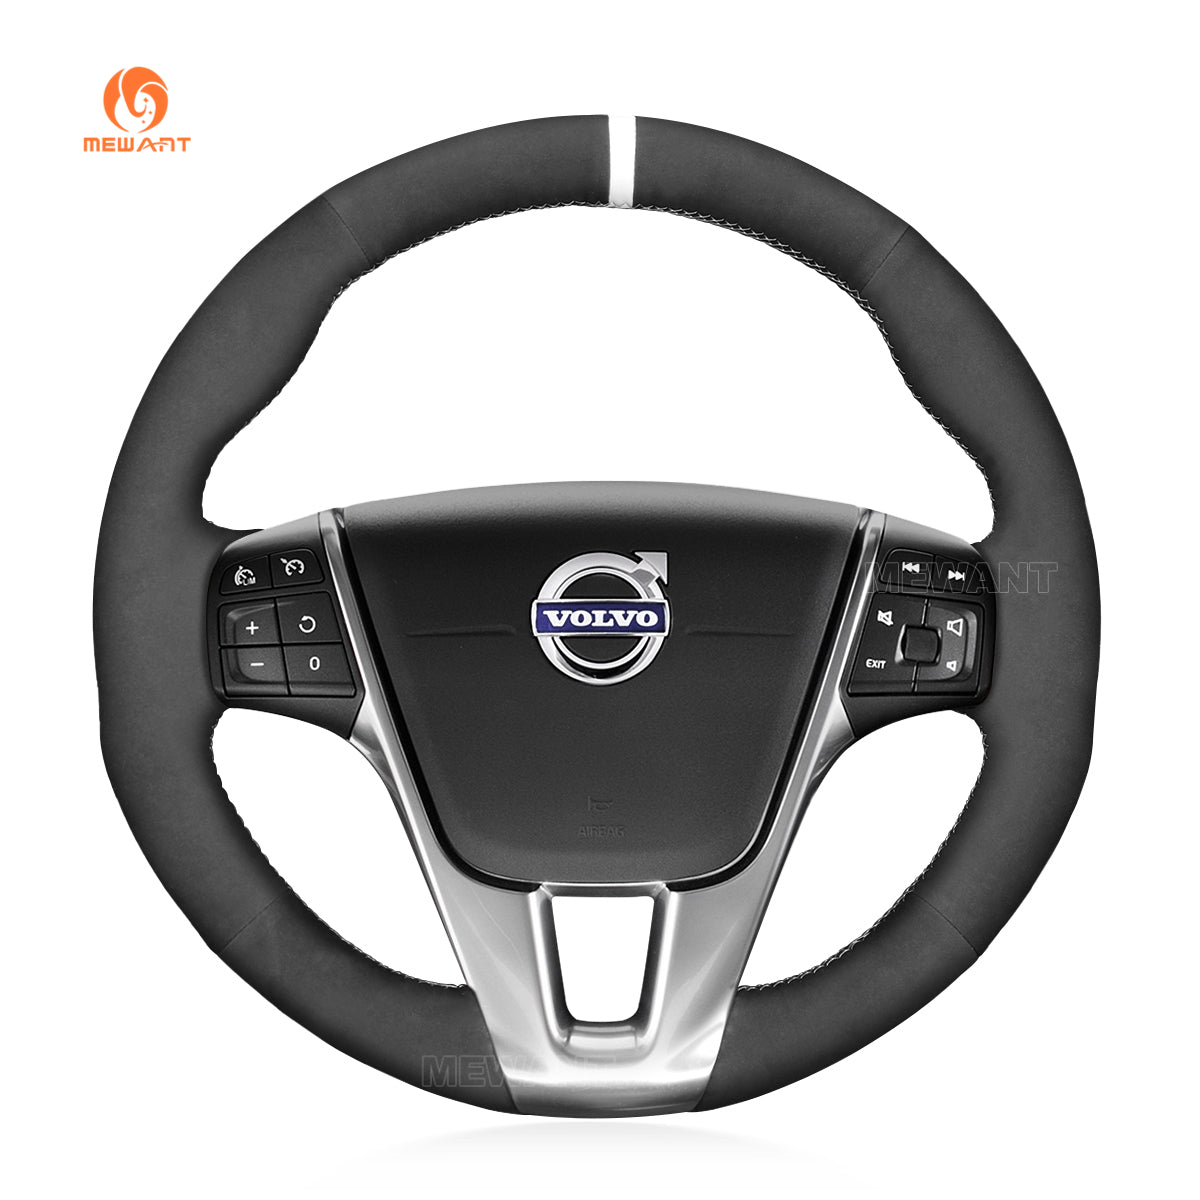 MEWANT Hand Stitch Car Steering Wheel Cover for Volvo S60 / V40 / V60 / V70 / 2014 XC60